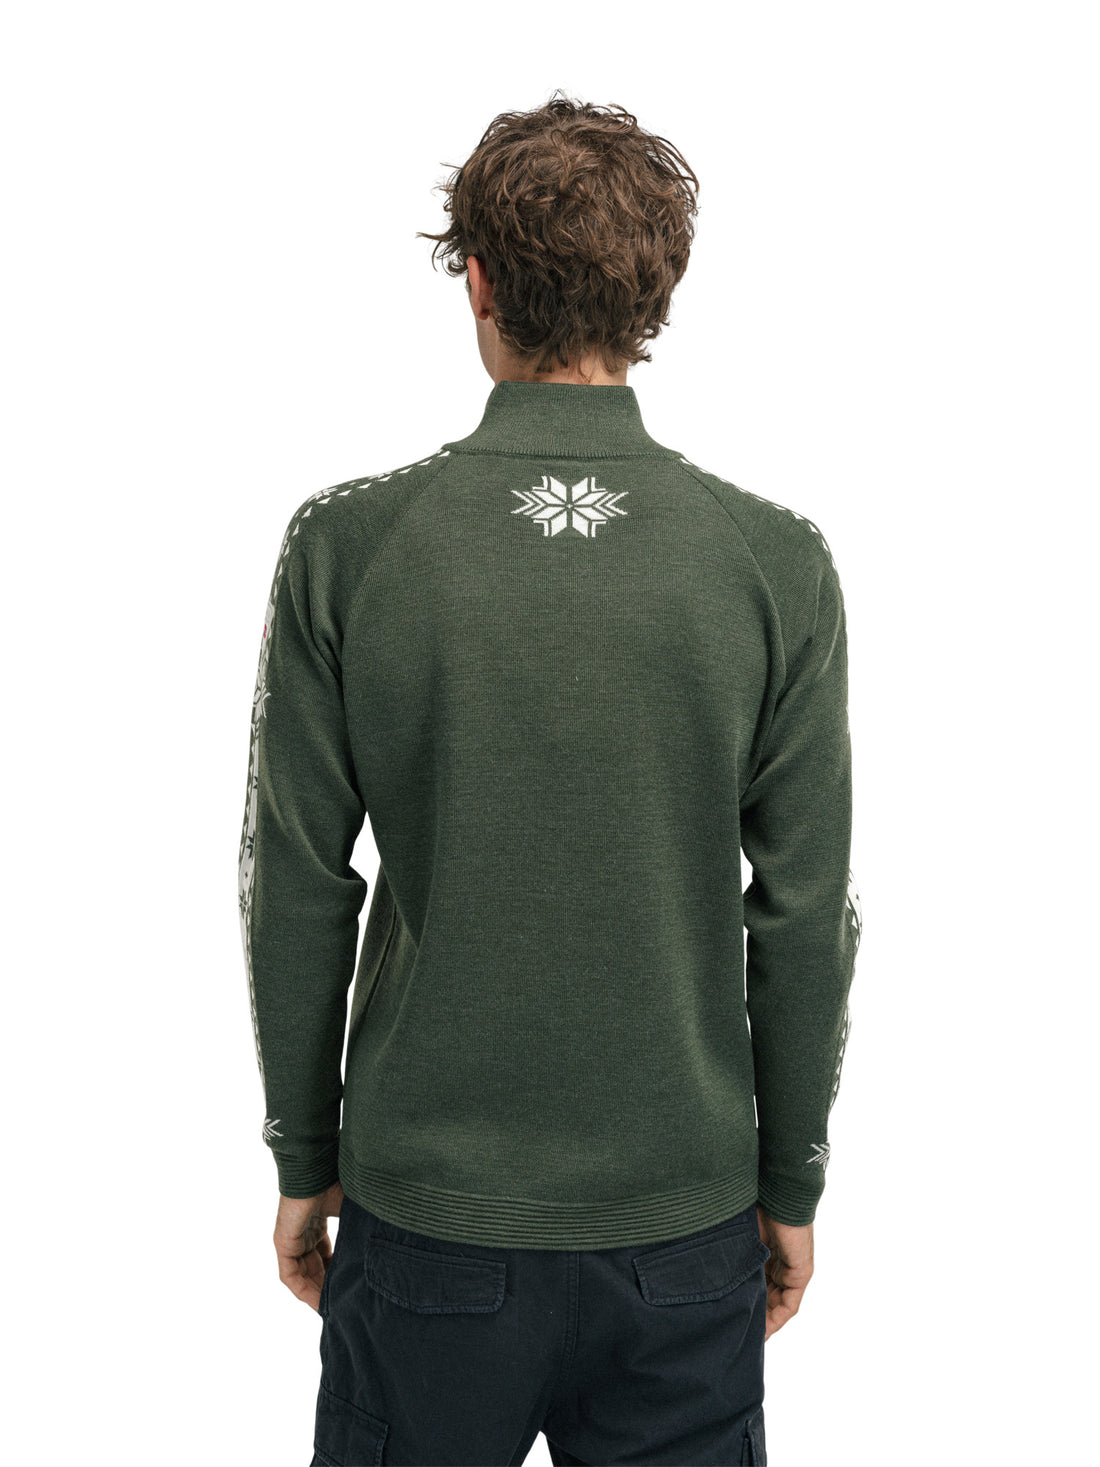 Dale of Norway - Geilo Men's Sweater - Dark green